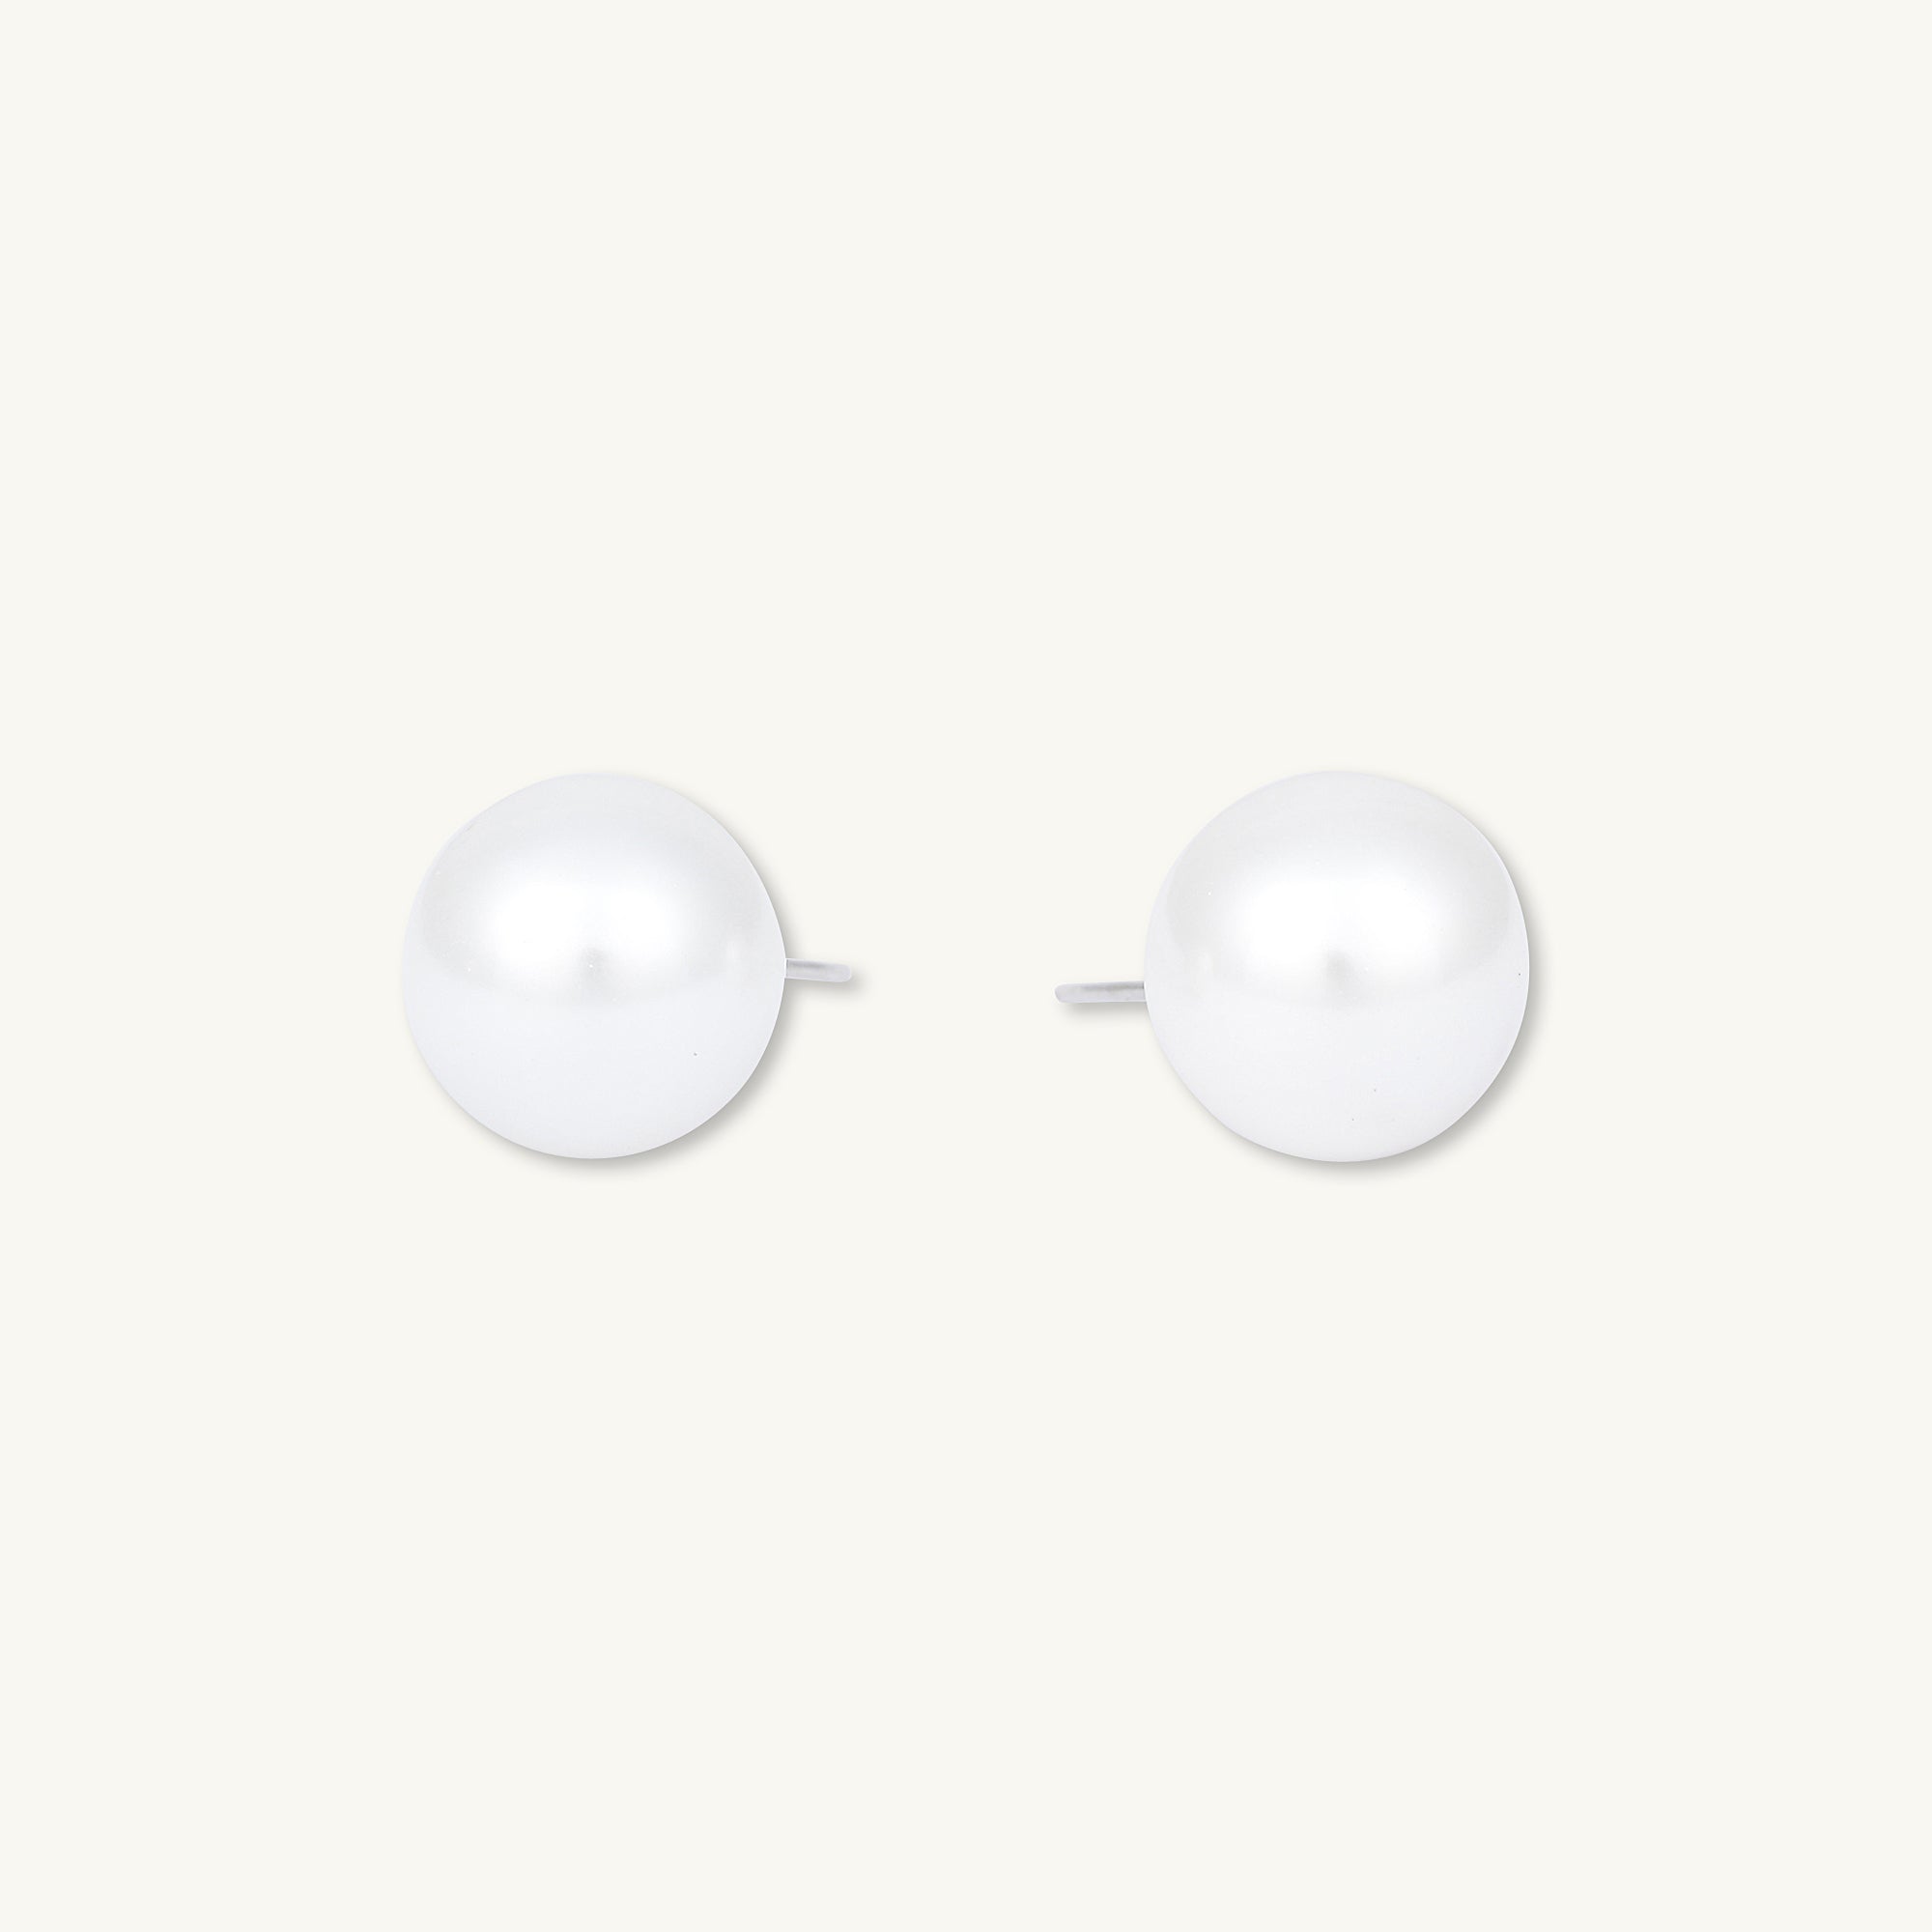 Statement Freshwater White Pearl Stud Earrings